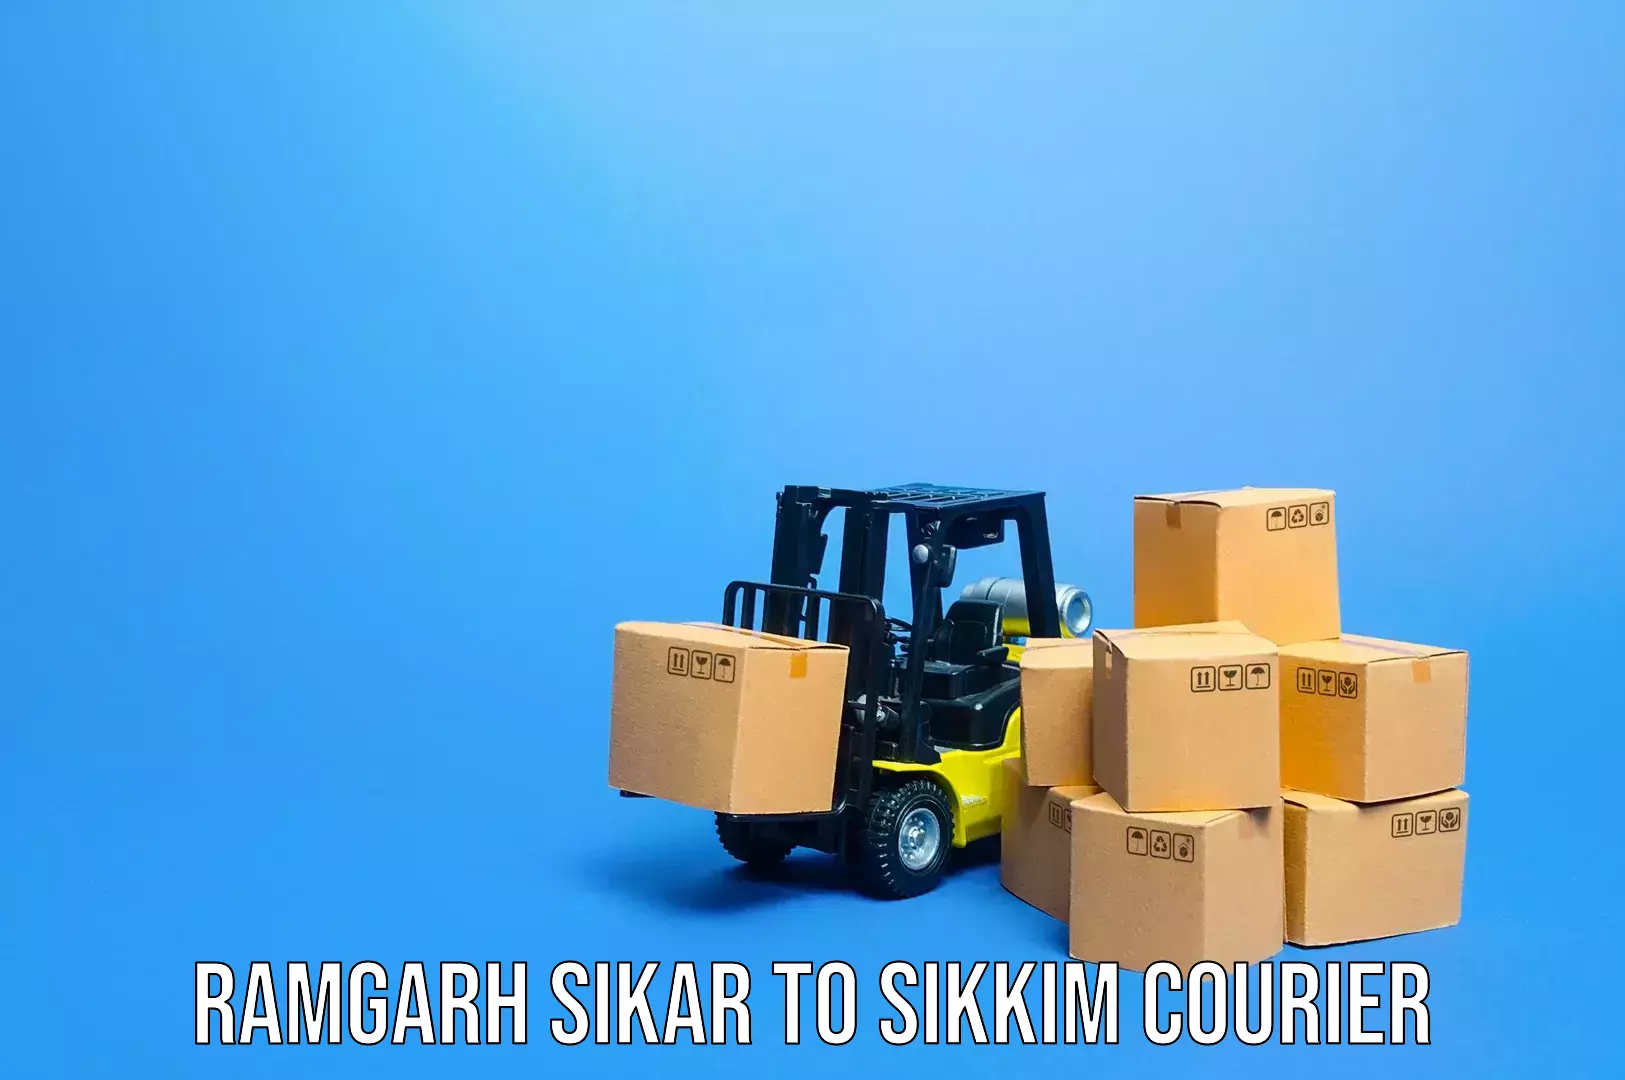 Luggage shipping specialists Ramgarh Sikar to Gangtok